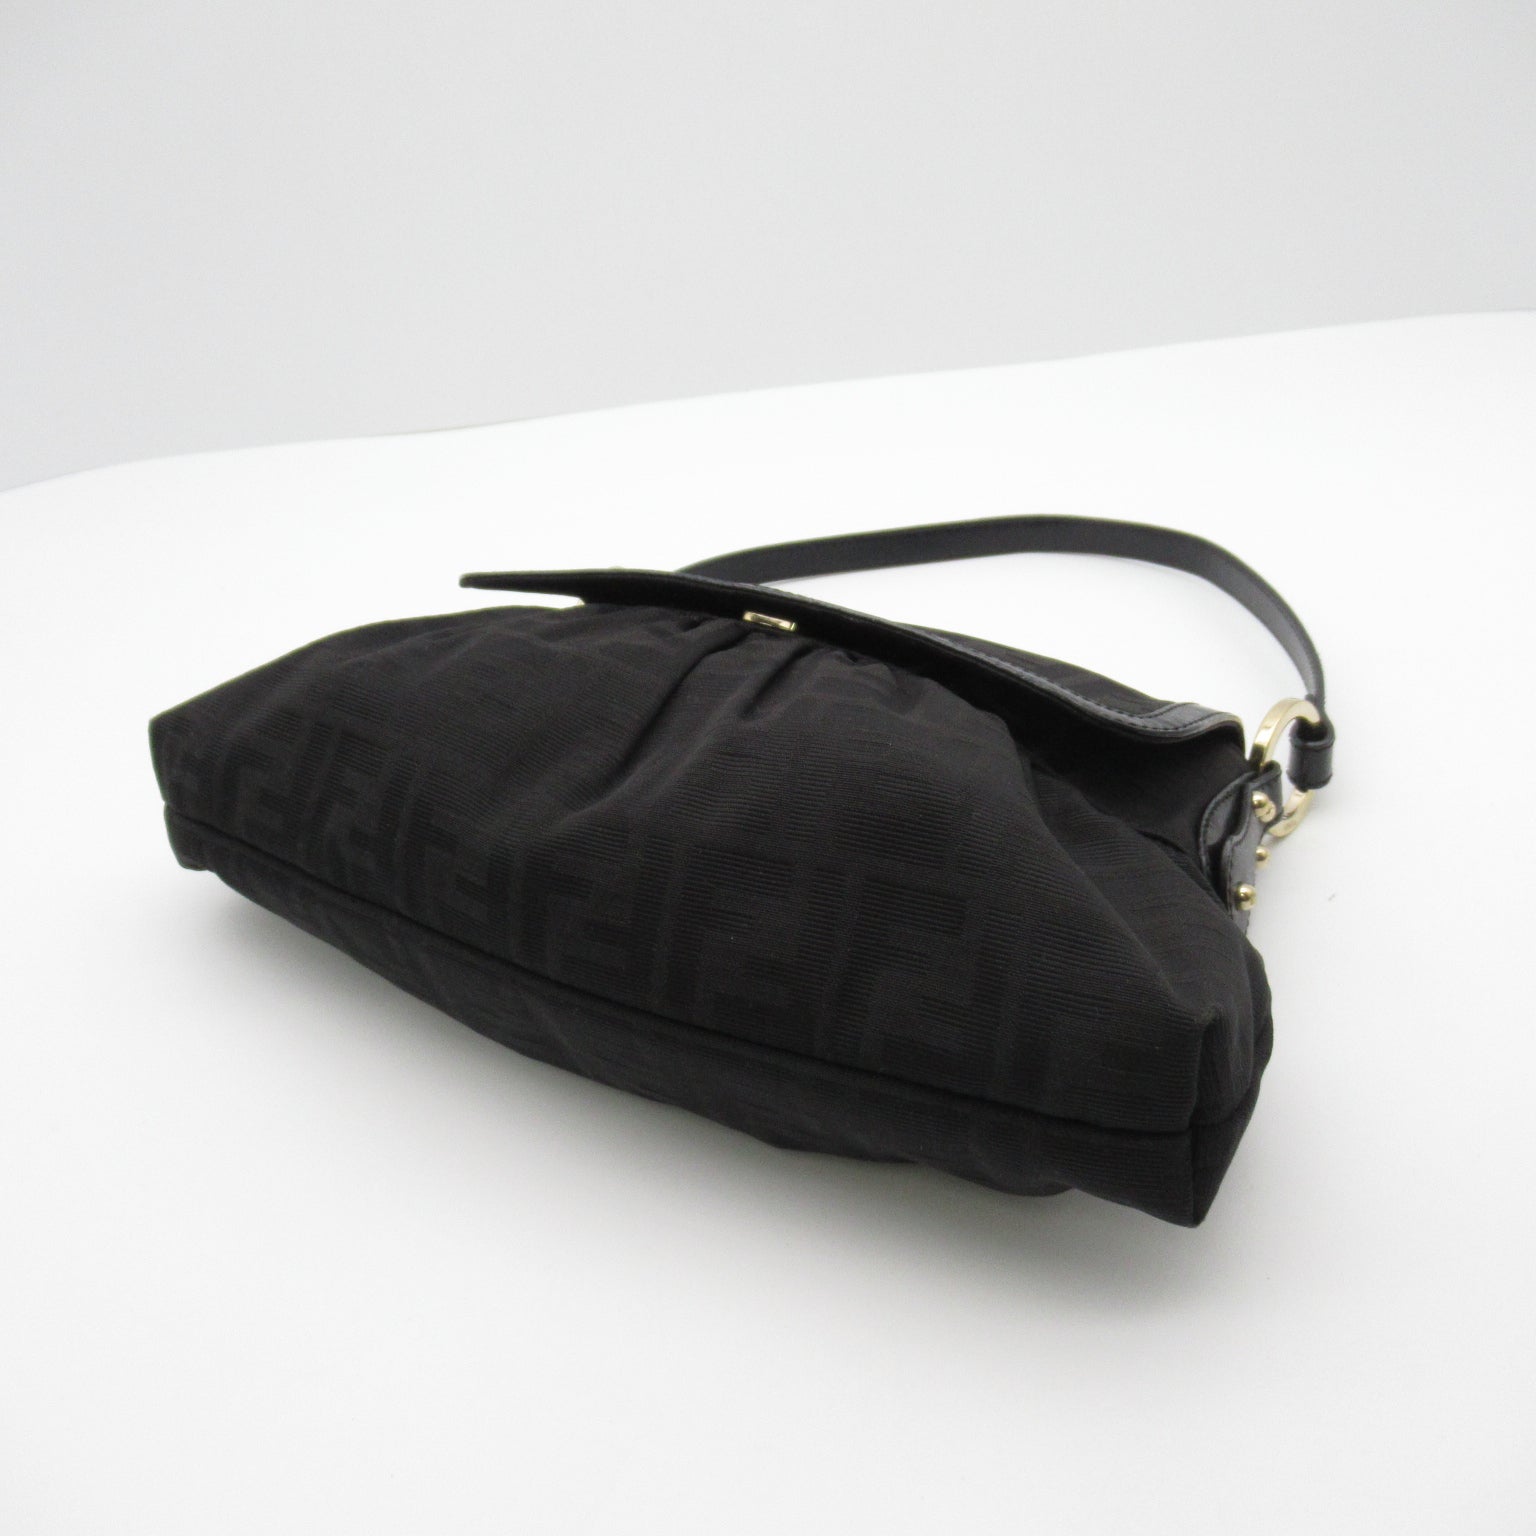 Fendi Fendi Zucca Handbag Handbag Handbag Leather Nylon  Black 8BR445